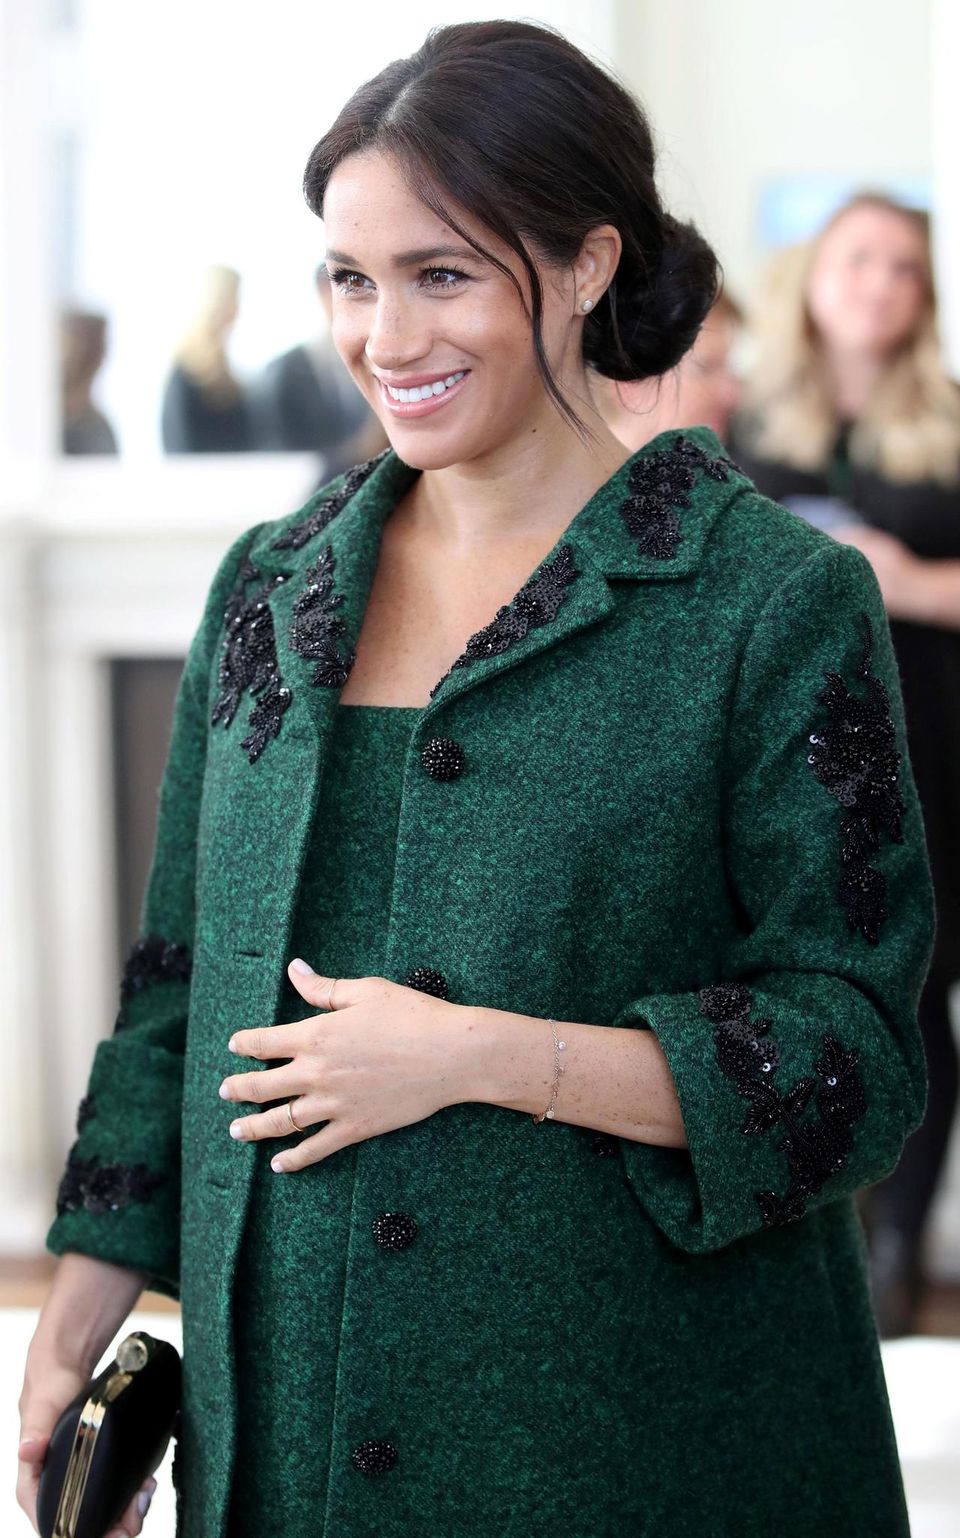 Lady Dianas Looks: Meghan Markle im grünen Outfit